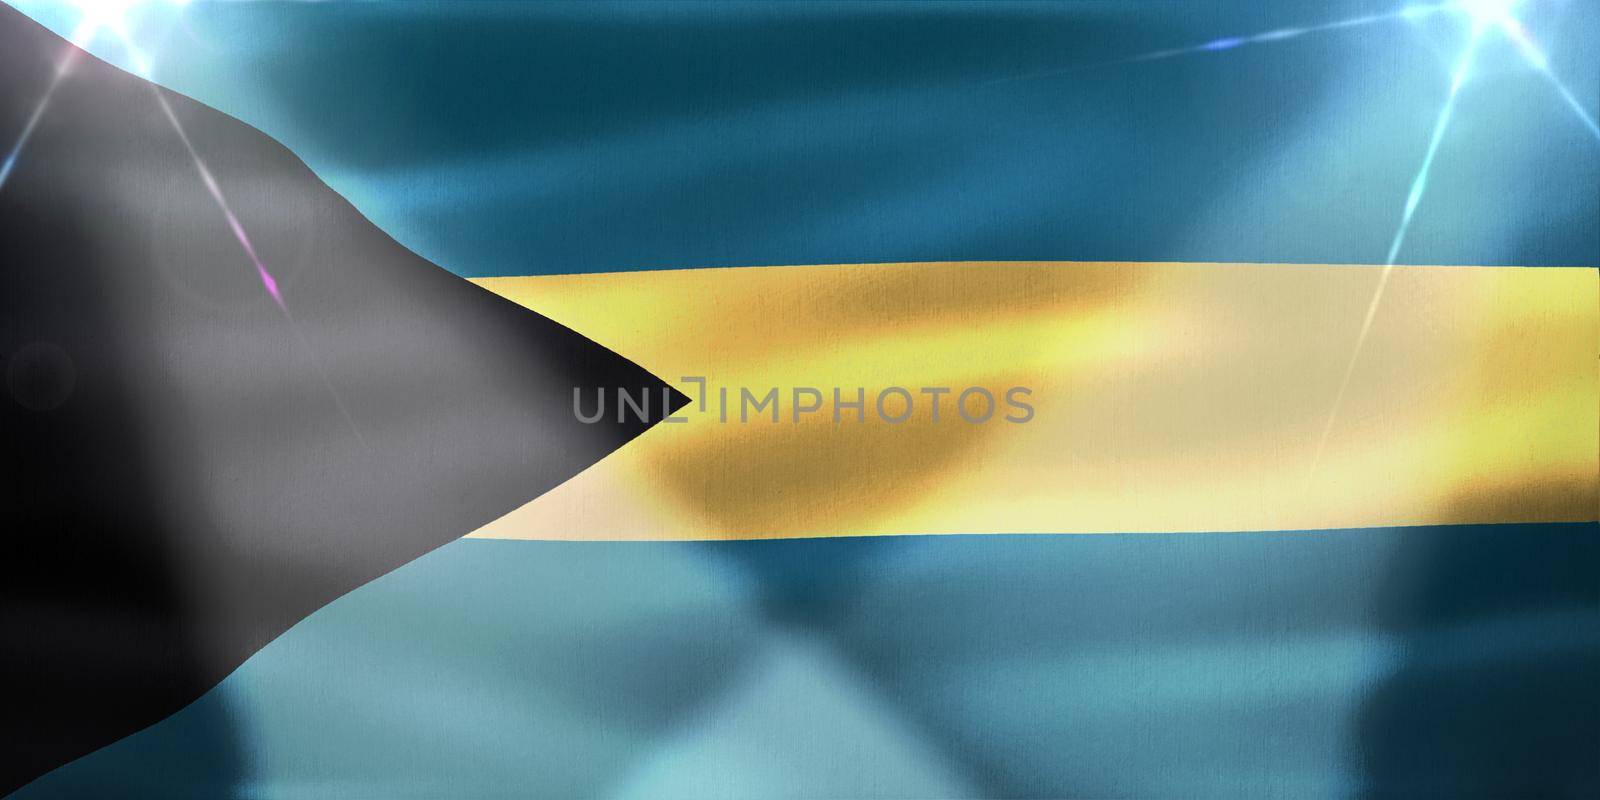 Bahamas flag - realistic waving fabric flag by MP_foto71